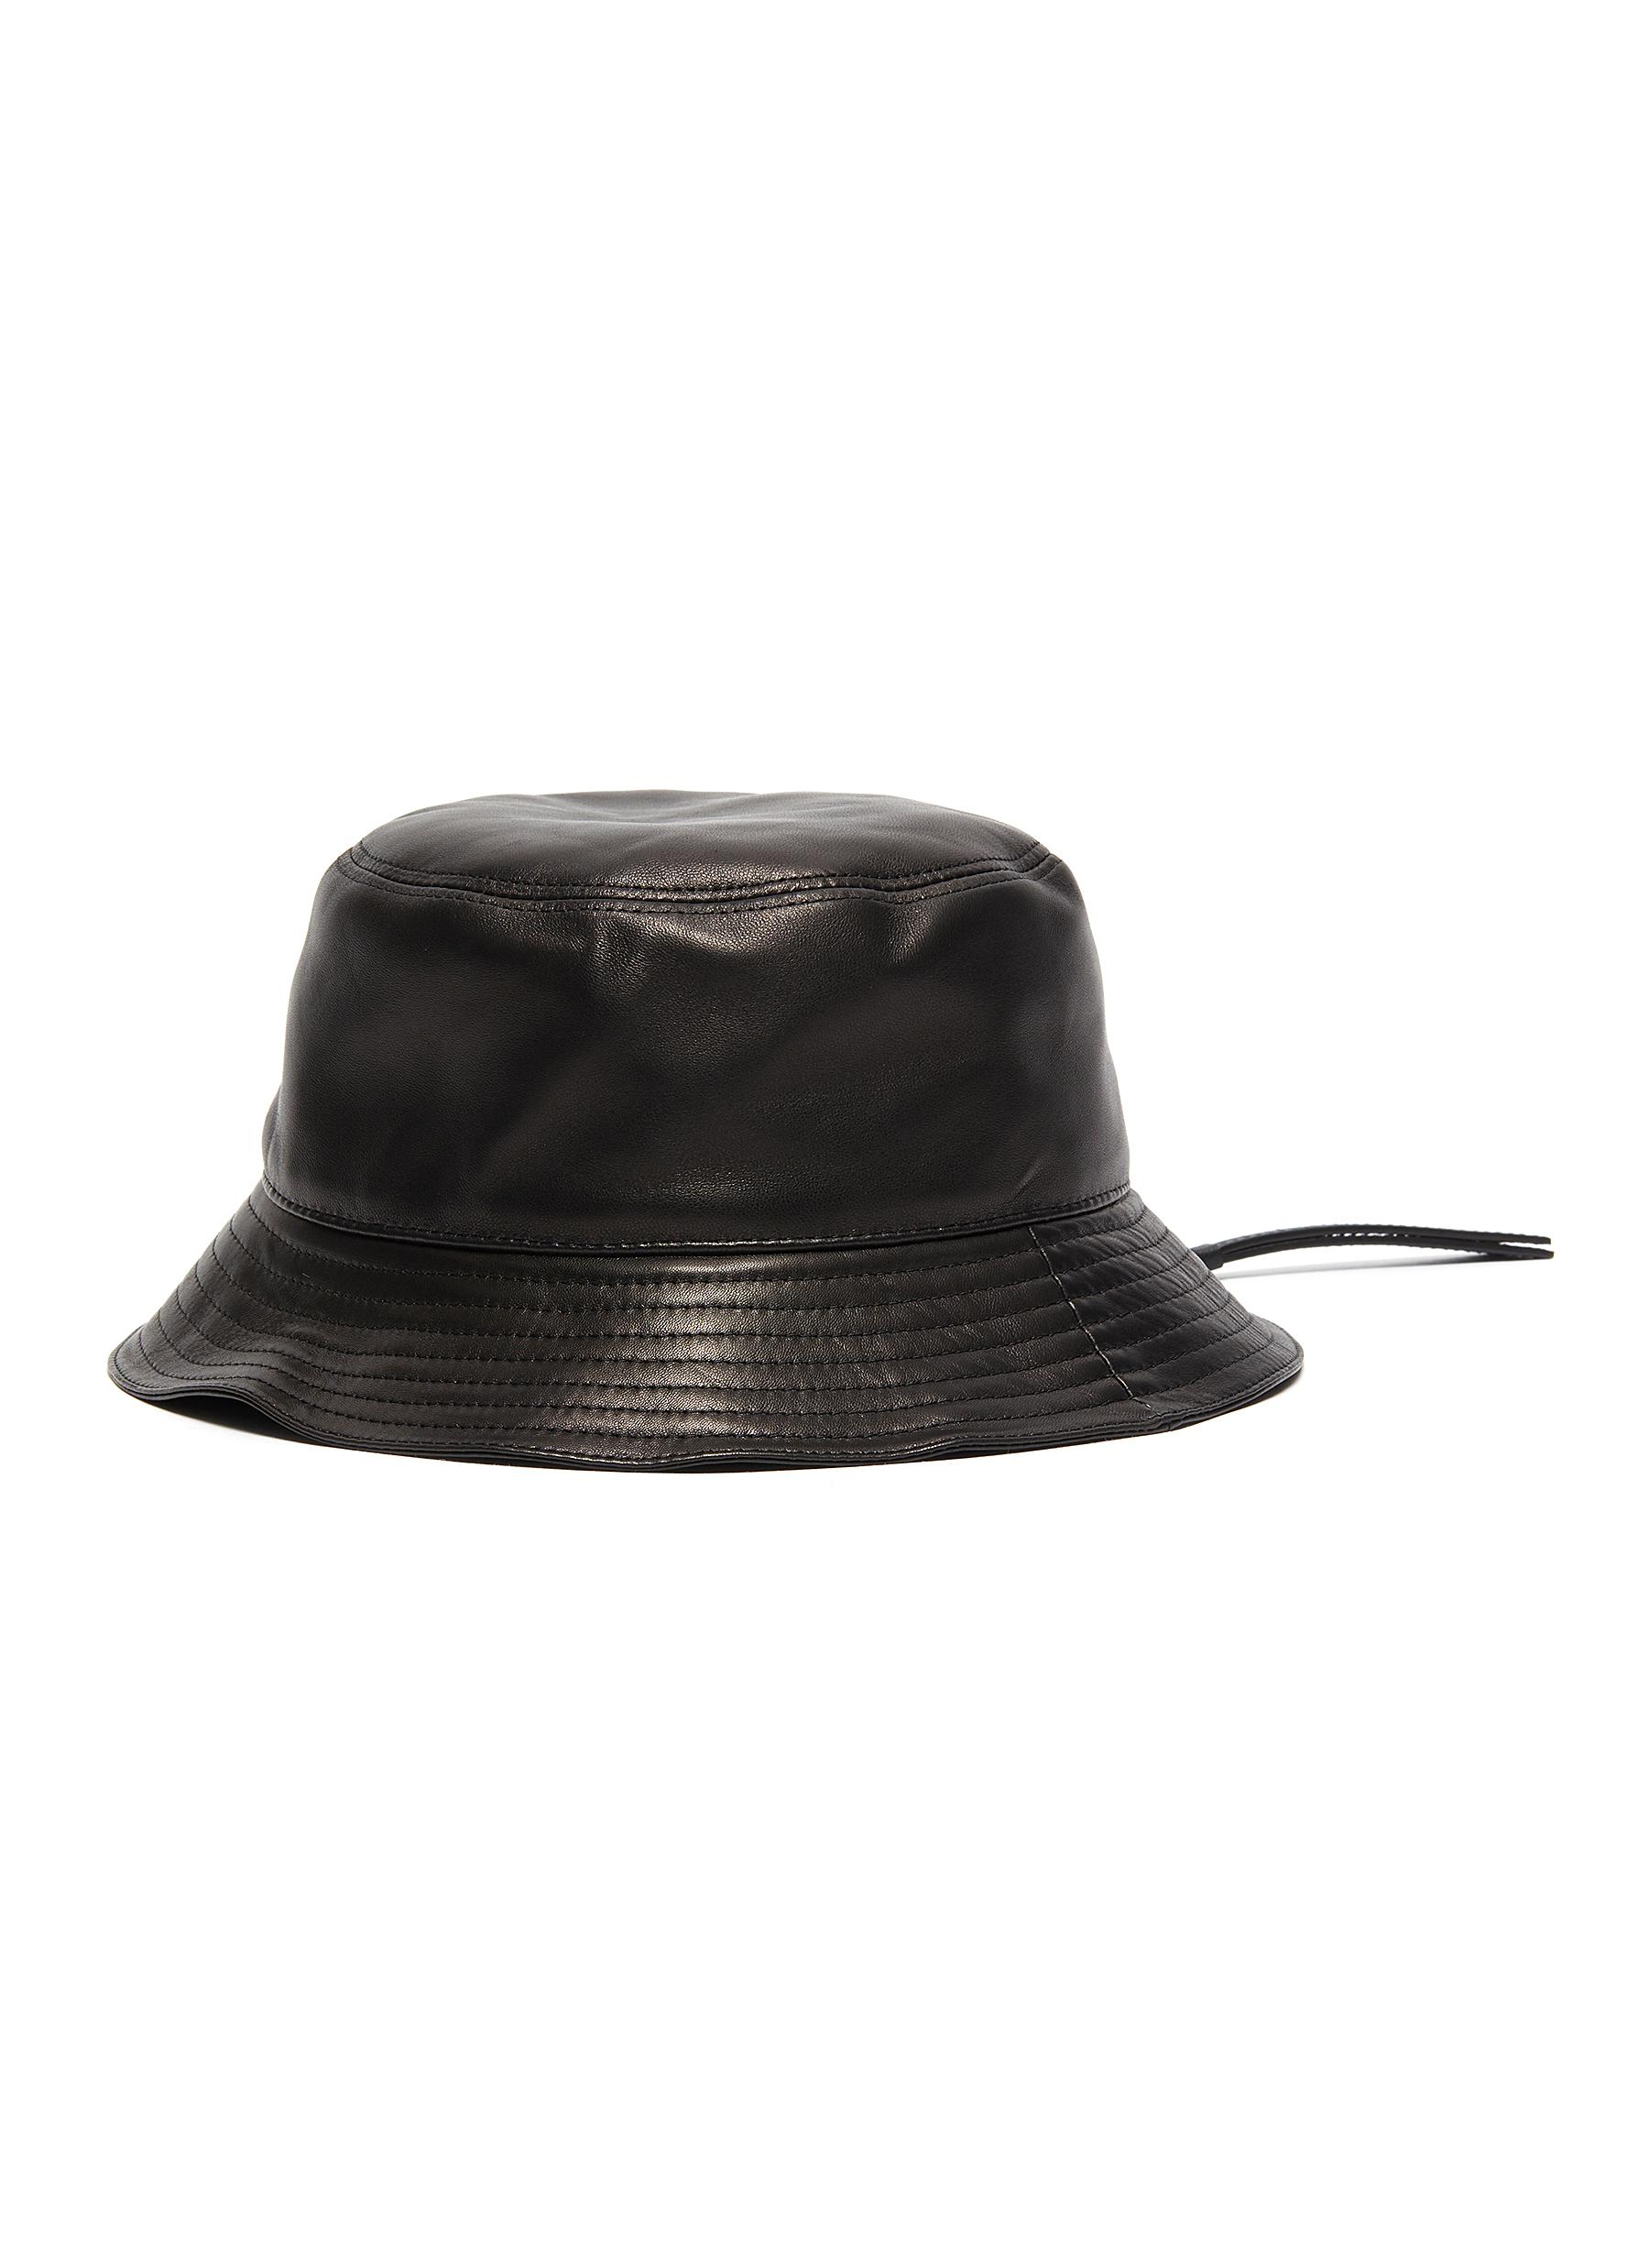 loewe leather hat